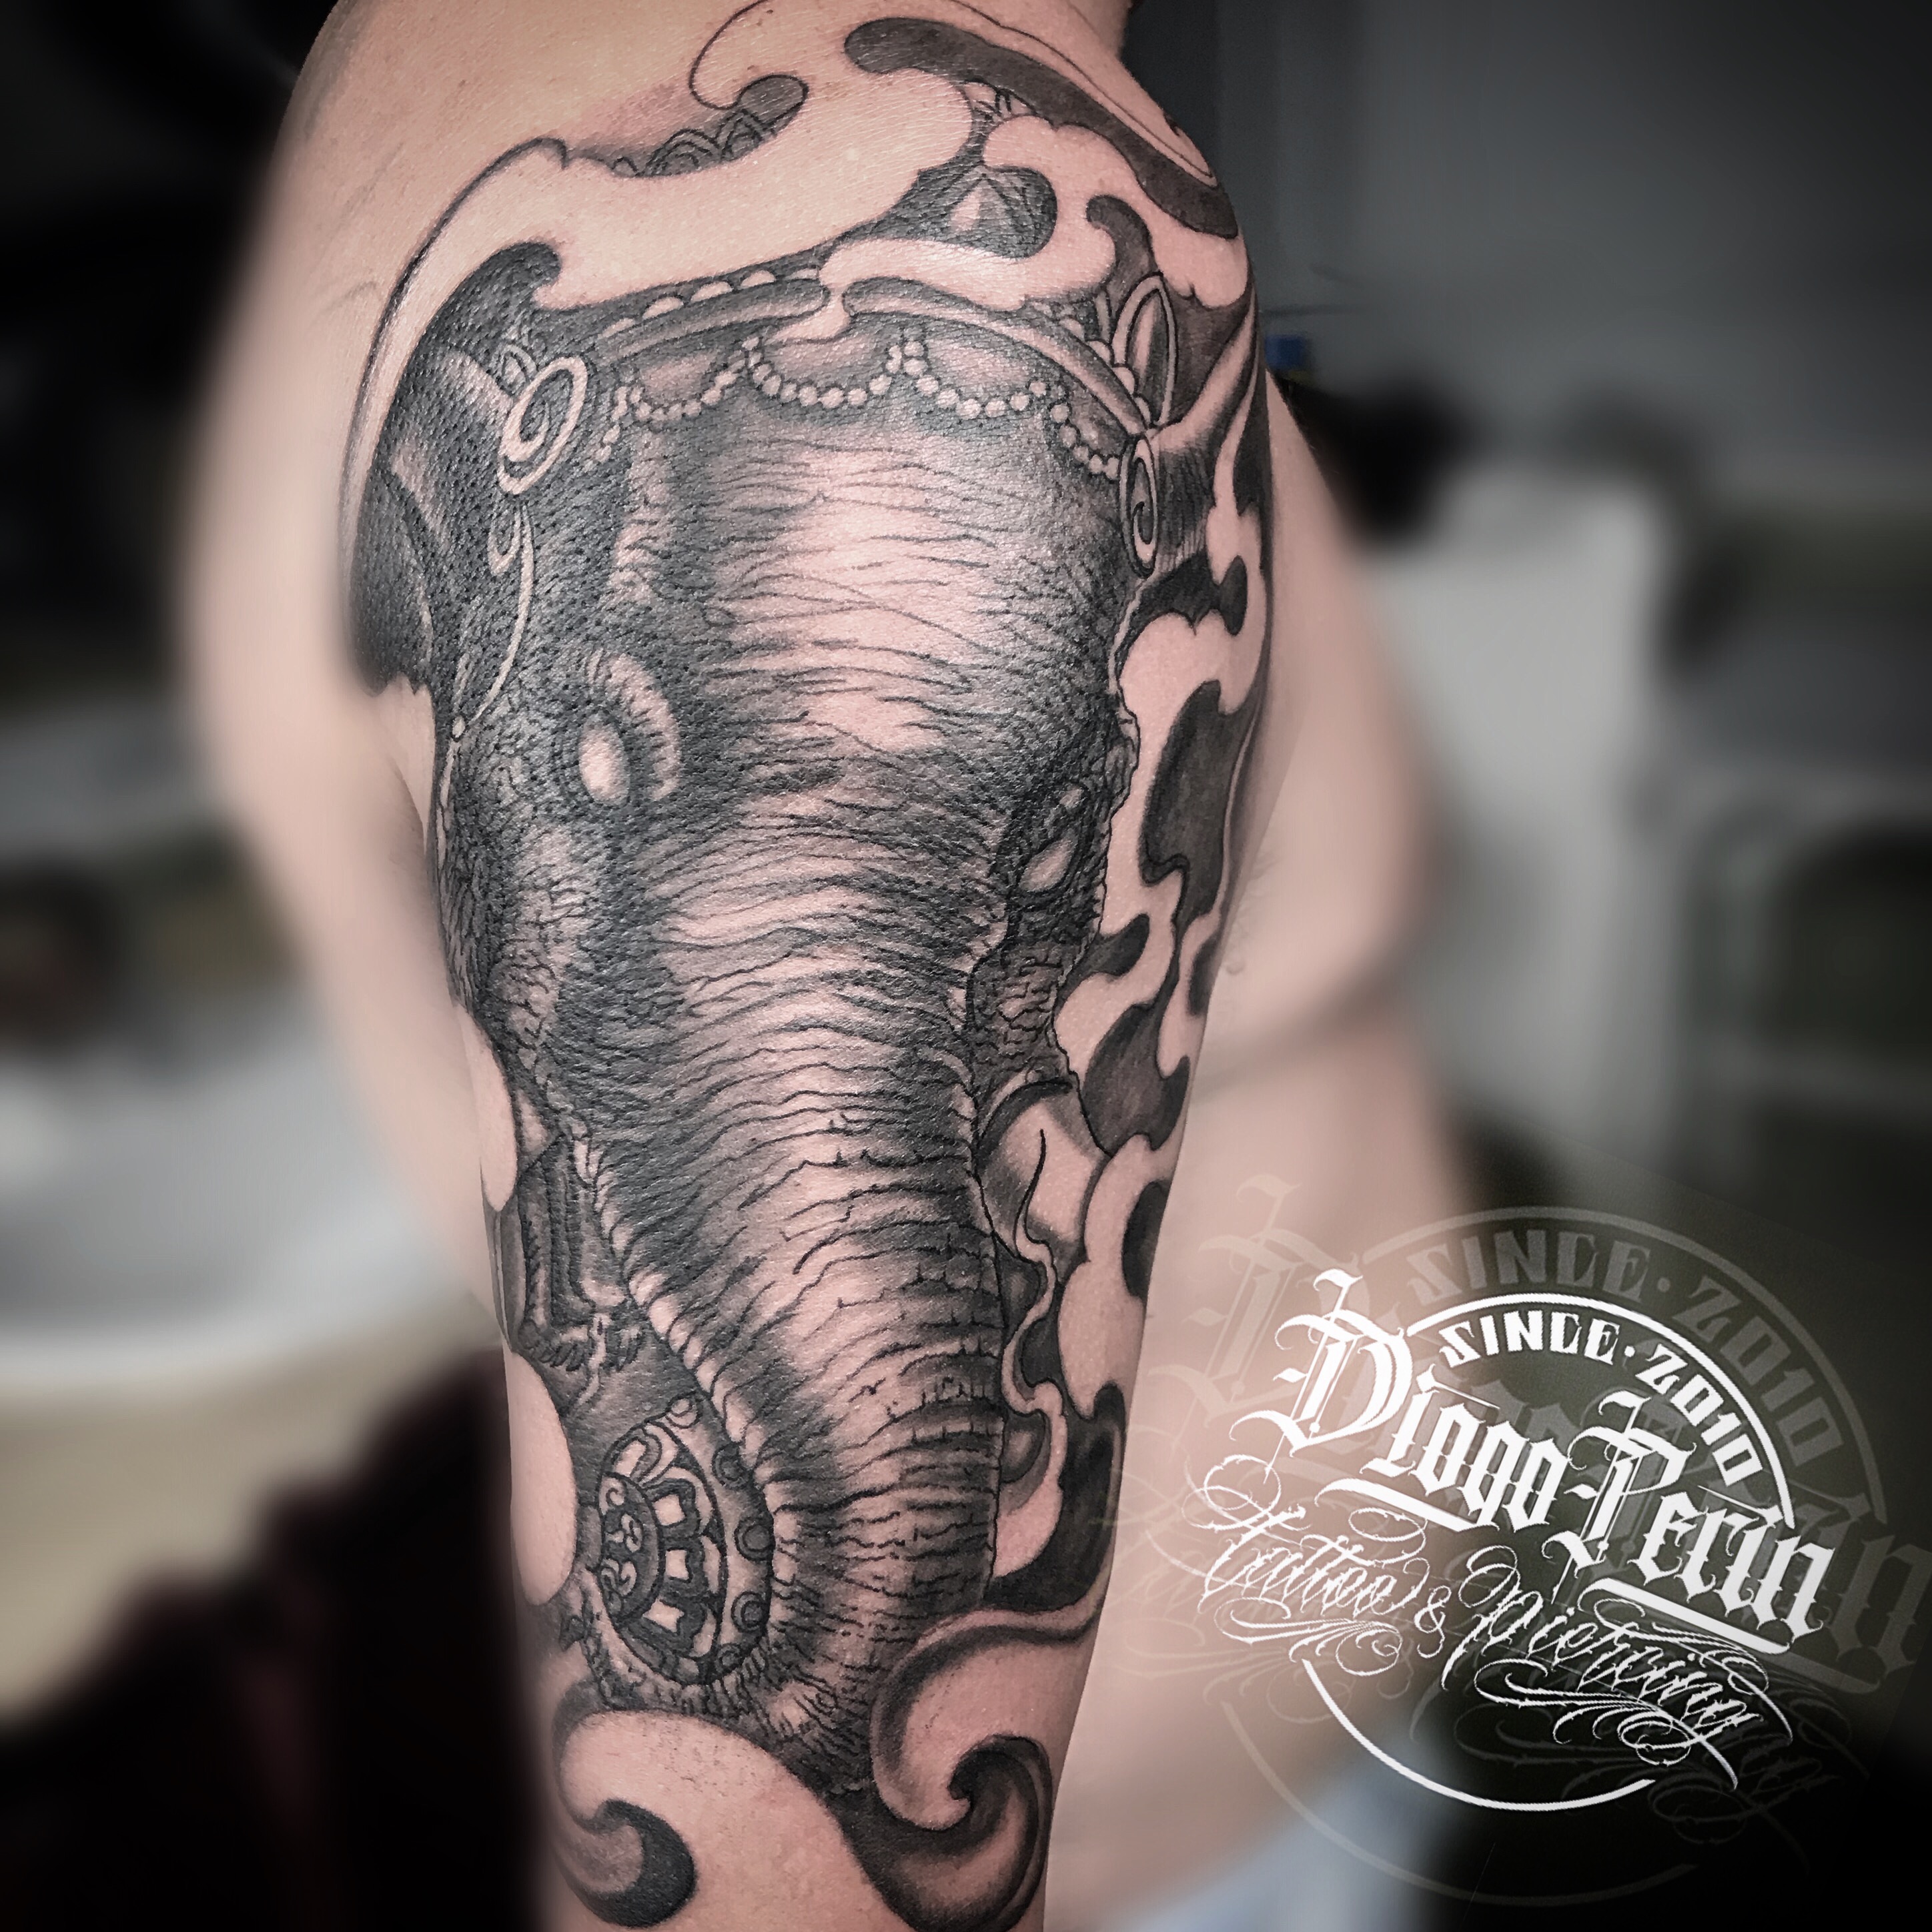 #ganesha #nigotadeblanco #ganesh #elephant #elefante #blacktattoo #mitologia #blackandgraytattoo #bydiogoperin #tattooartist #santapola #alicante #guardamar #crevillent #tattoo #freestyle #artistacompleto #originaltattoo #ink #inked #inktattoo #inktober #inkadiction #ideatattoo #tattooidea #tatuagem #tatuaje #tattoomagazine #tattooing